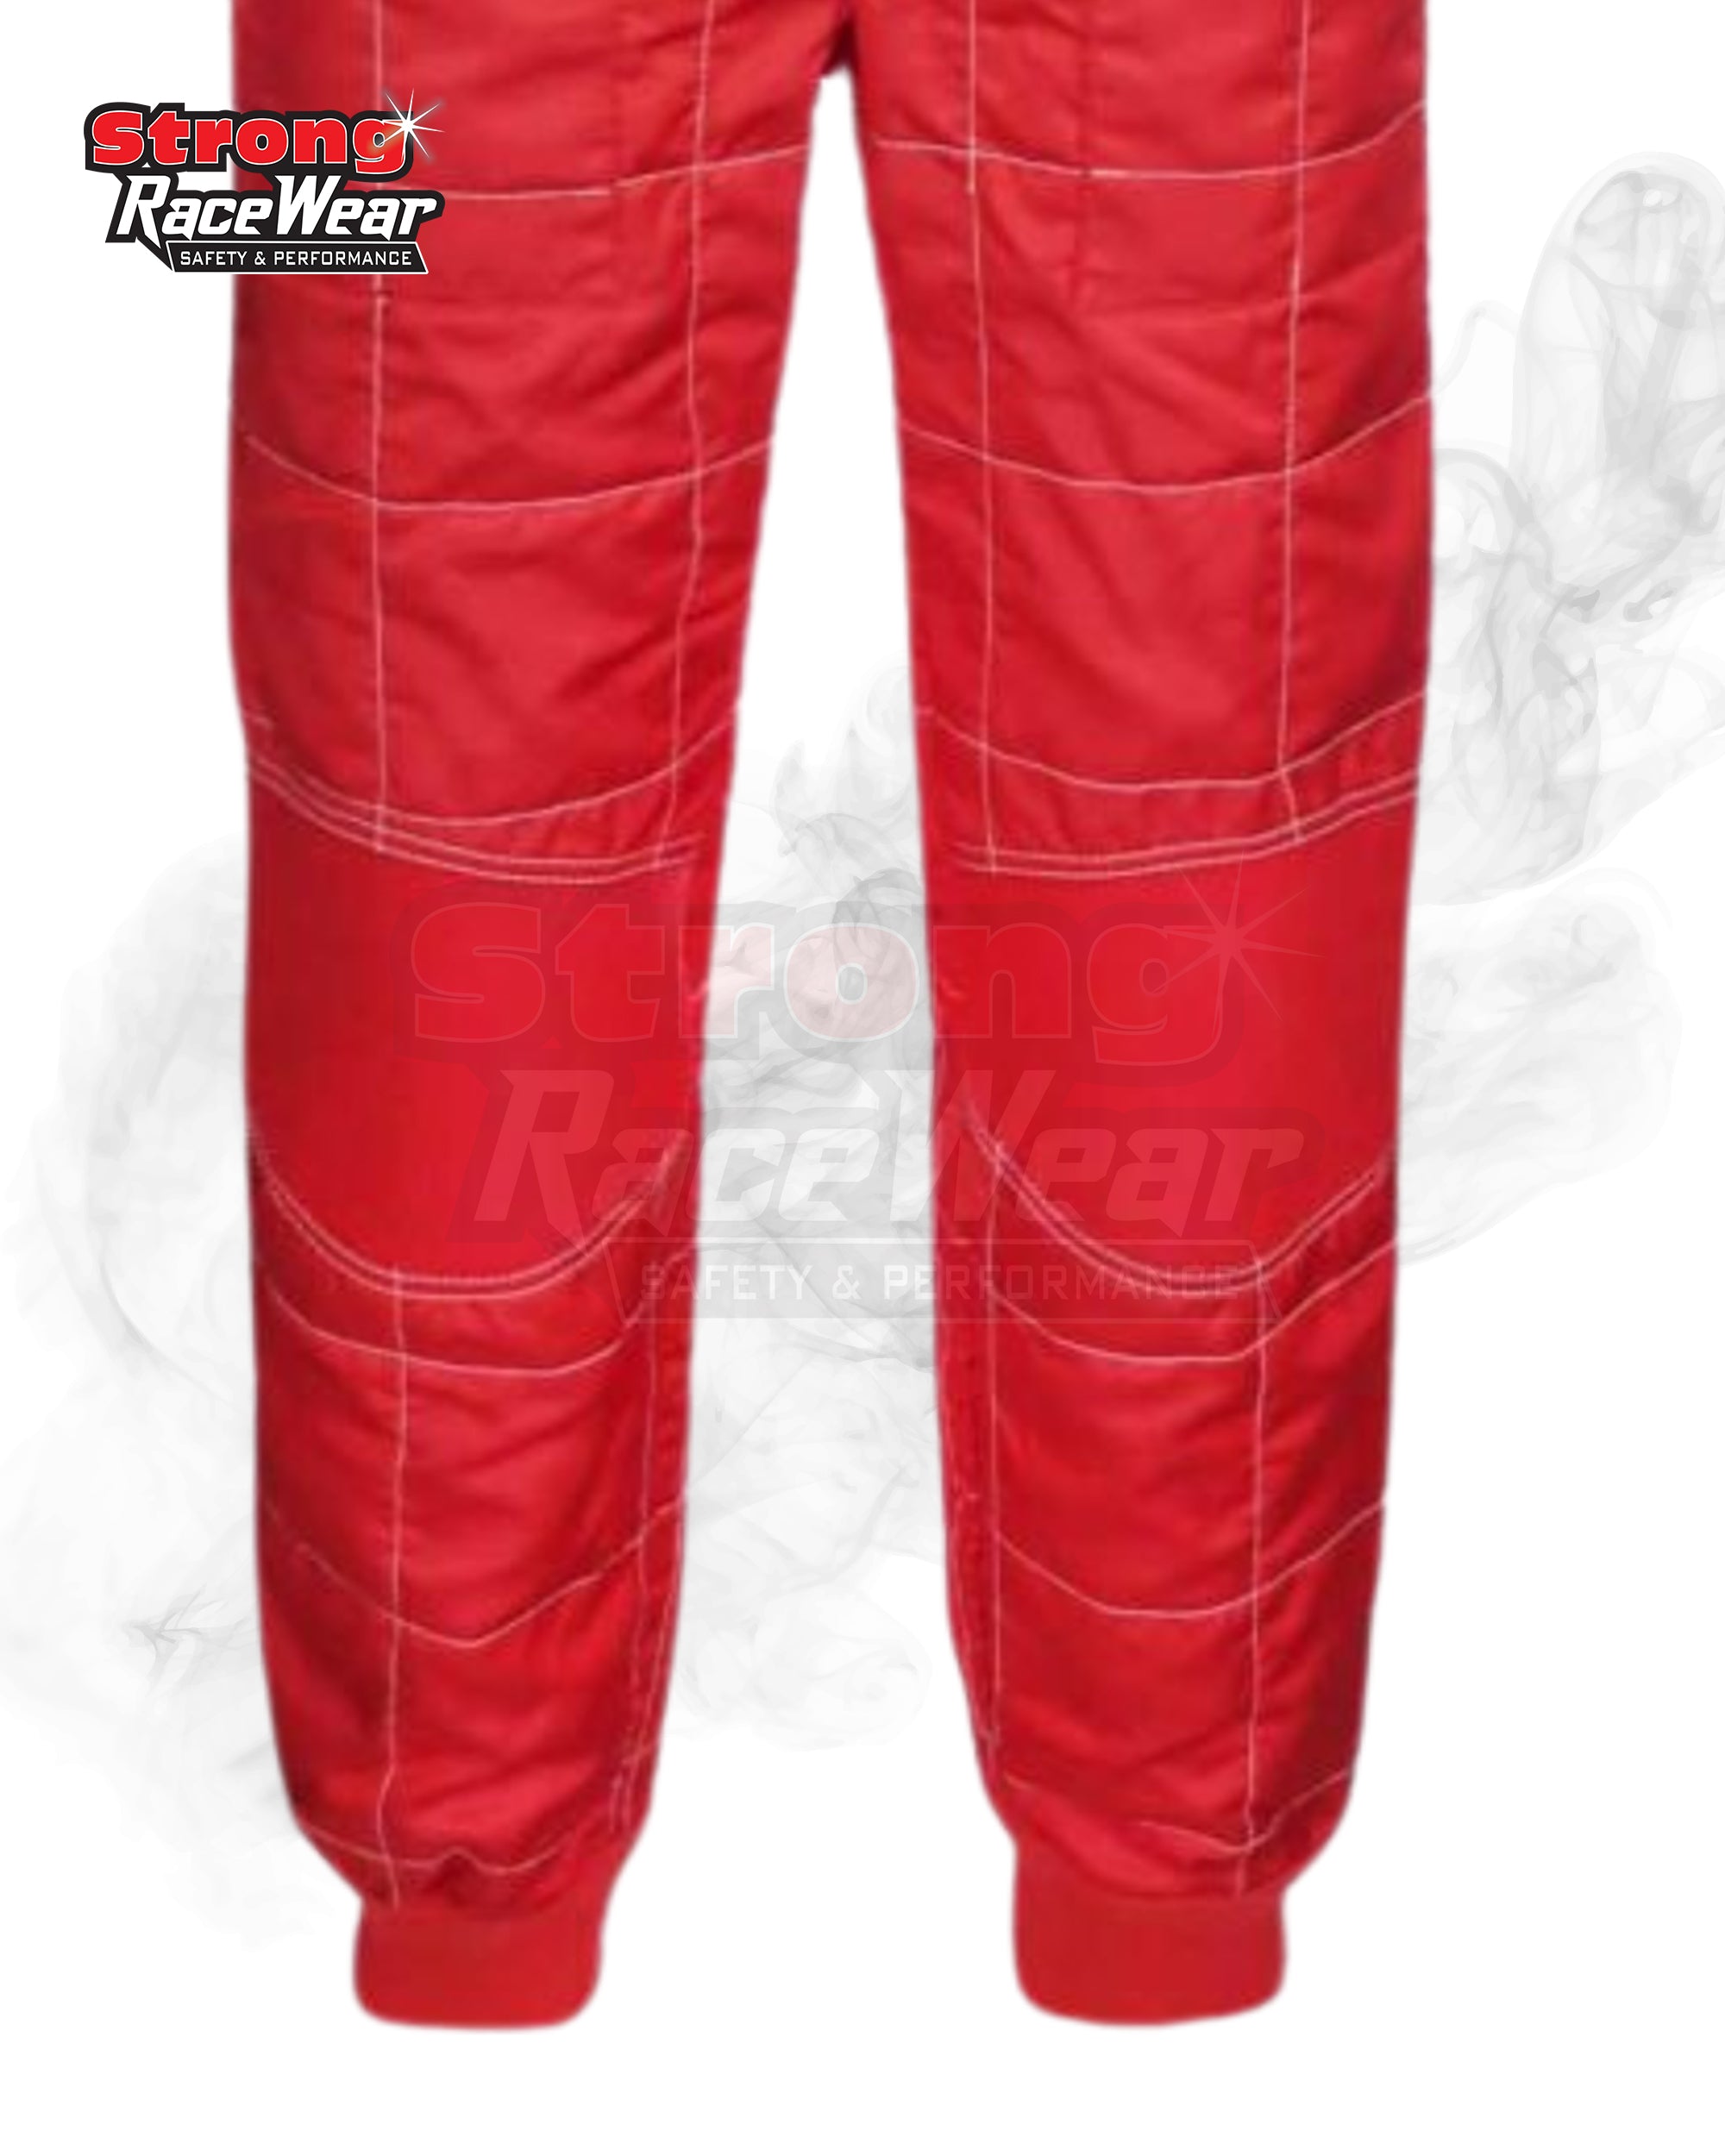 2006 Michael Schumacher Scuderia Ferrari F1 Racing Suit